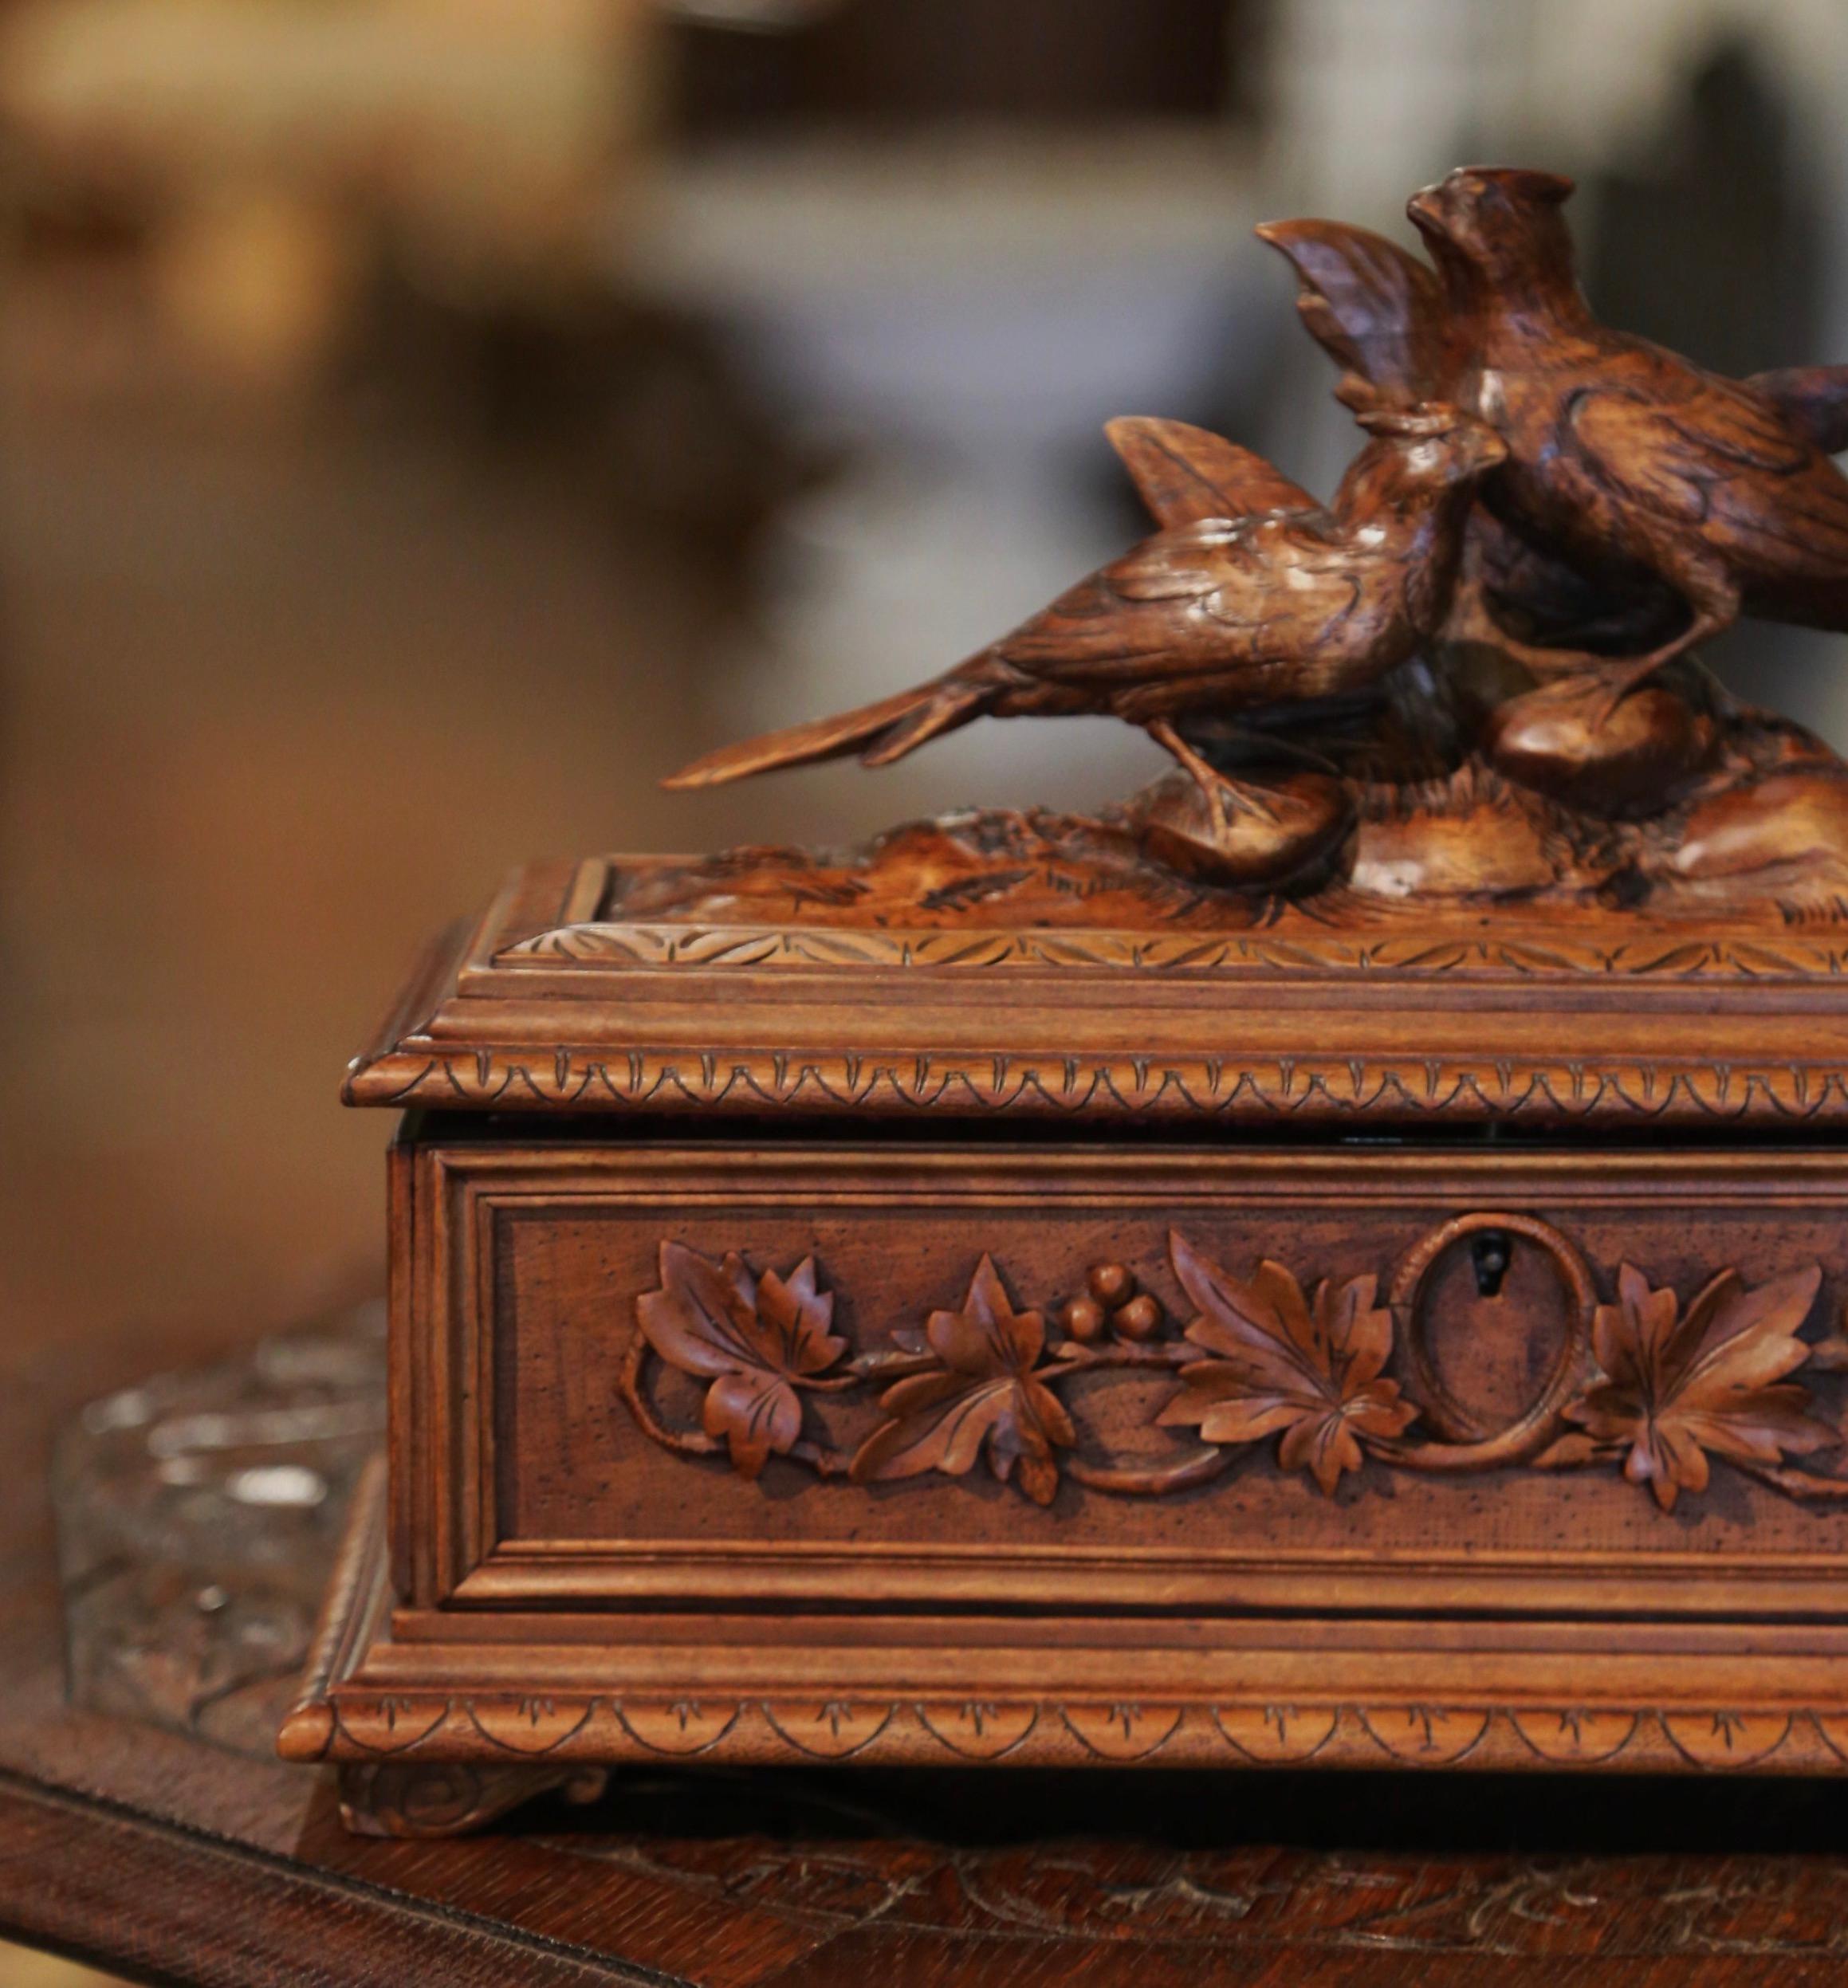 Velvet 19th Century French Black Forest Carved Walnut Jewelry Box with Bird Motifs